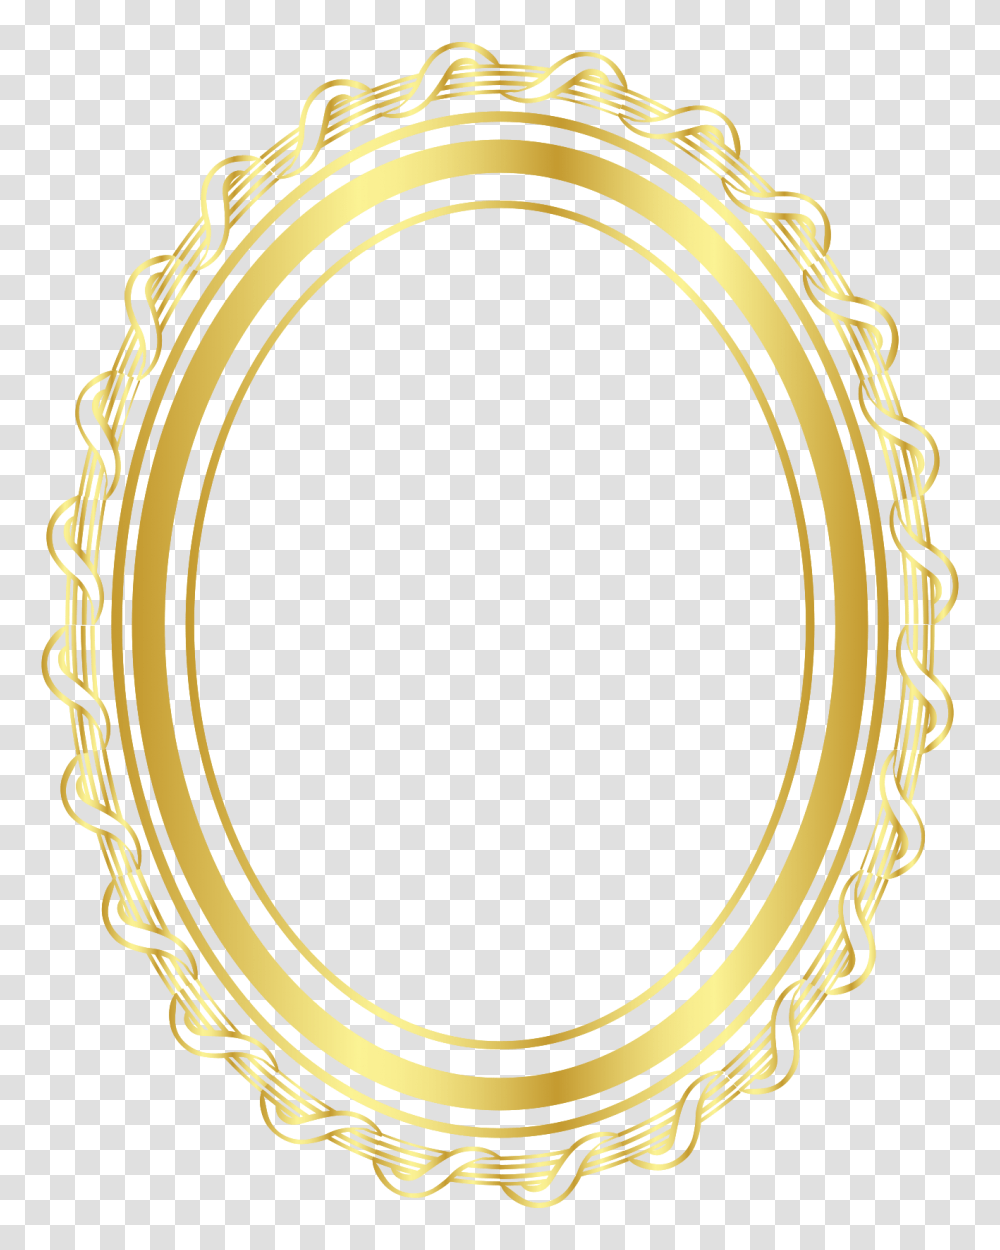 Free Gold Oval Frame With Oval Moldura Dourada Transparent Png